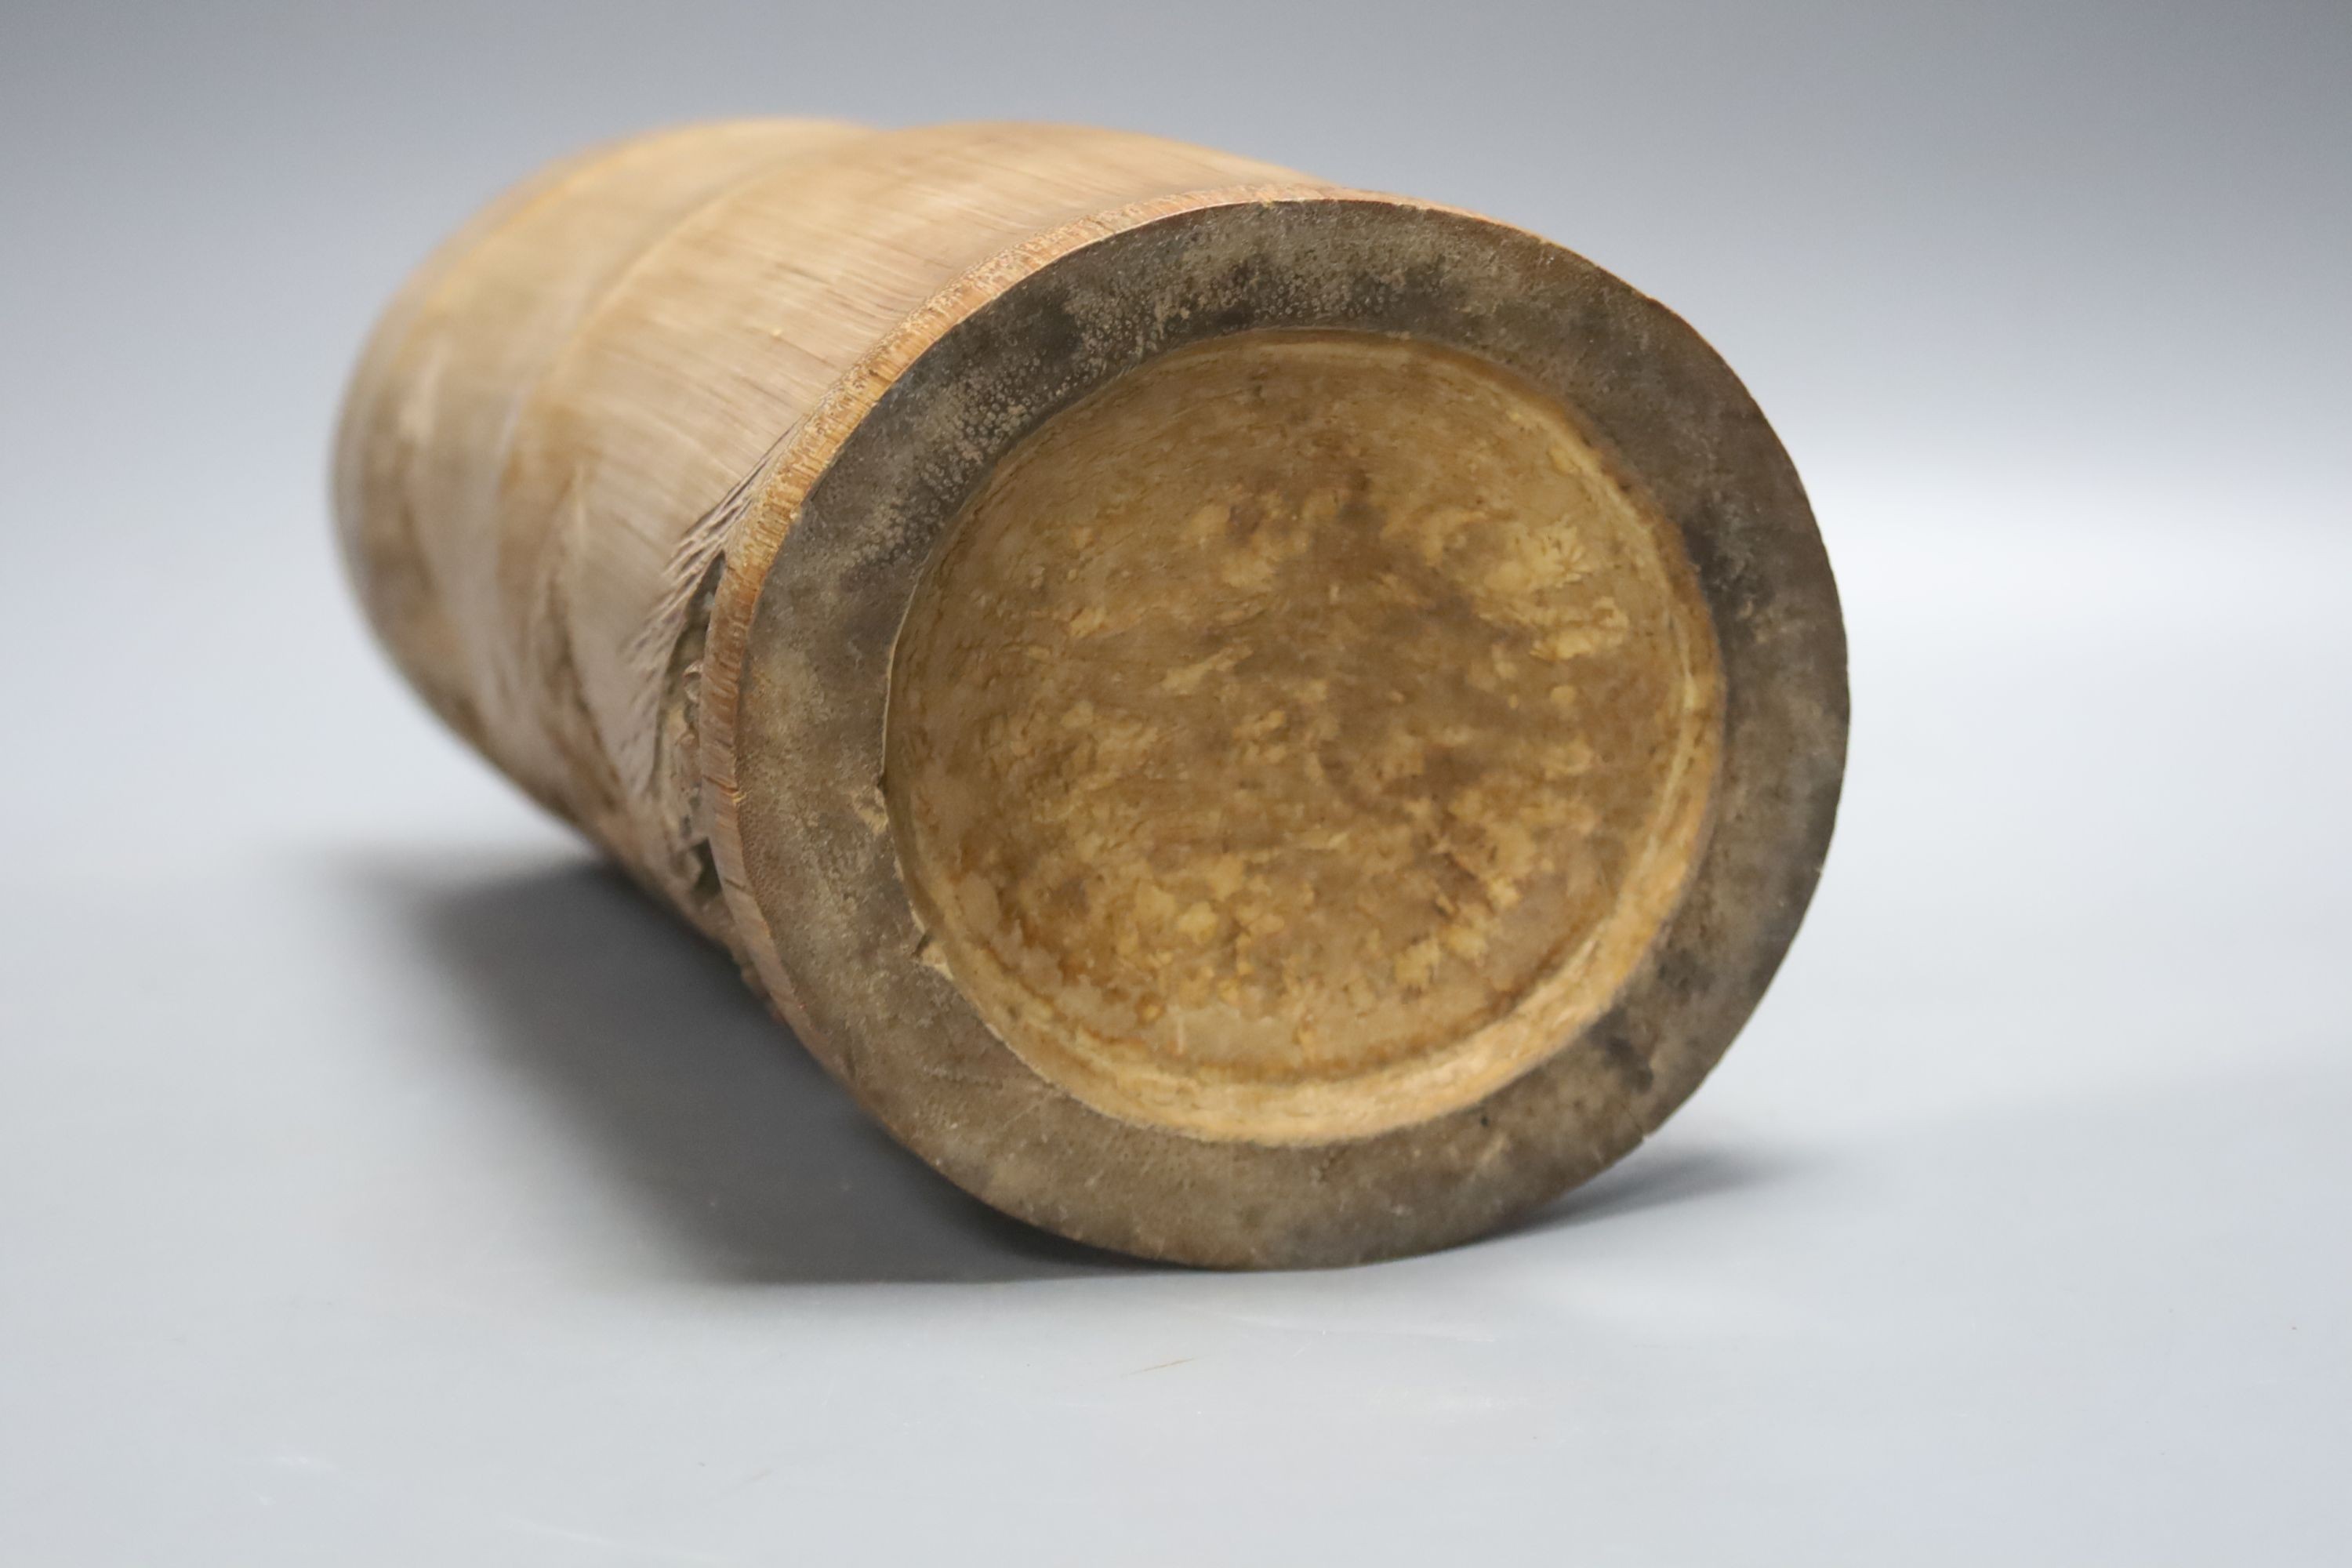 A Chinese bamboo brushpot, 26cm